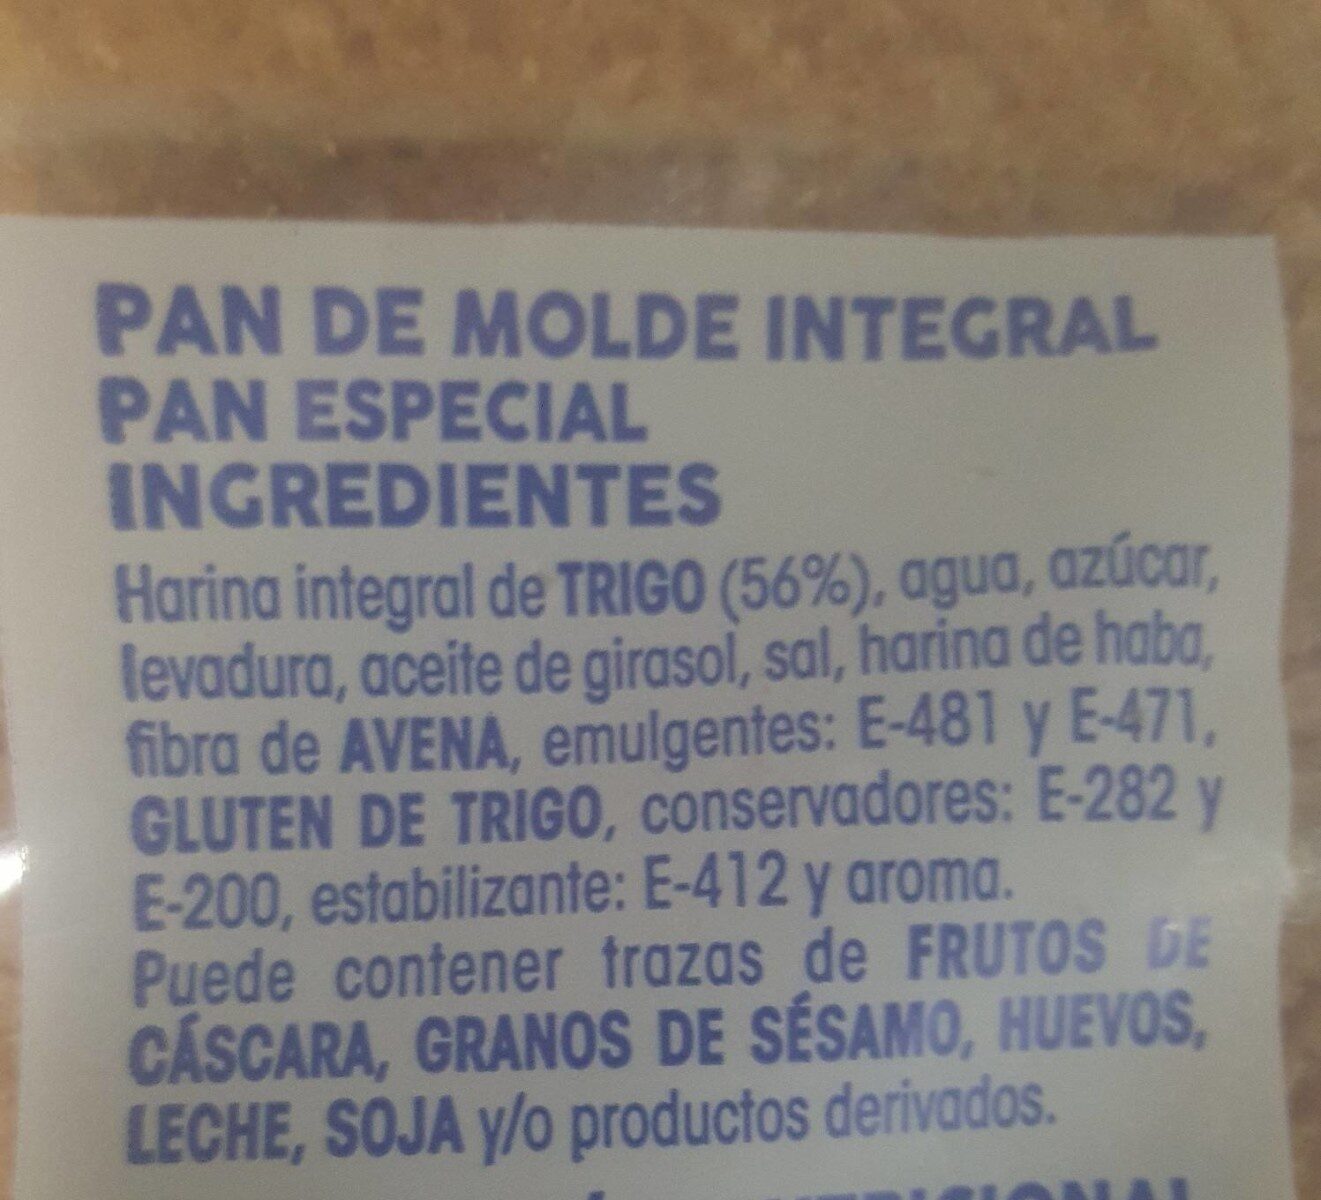 Pan de molde integral - Información nutricional